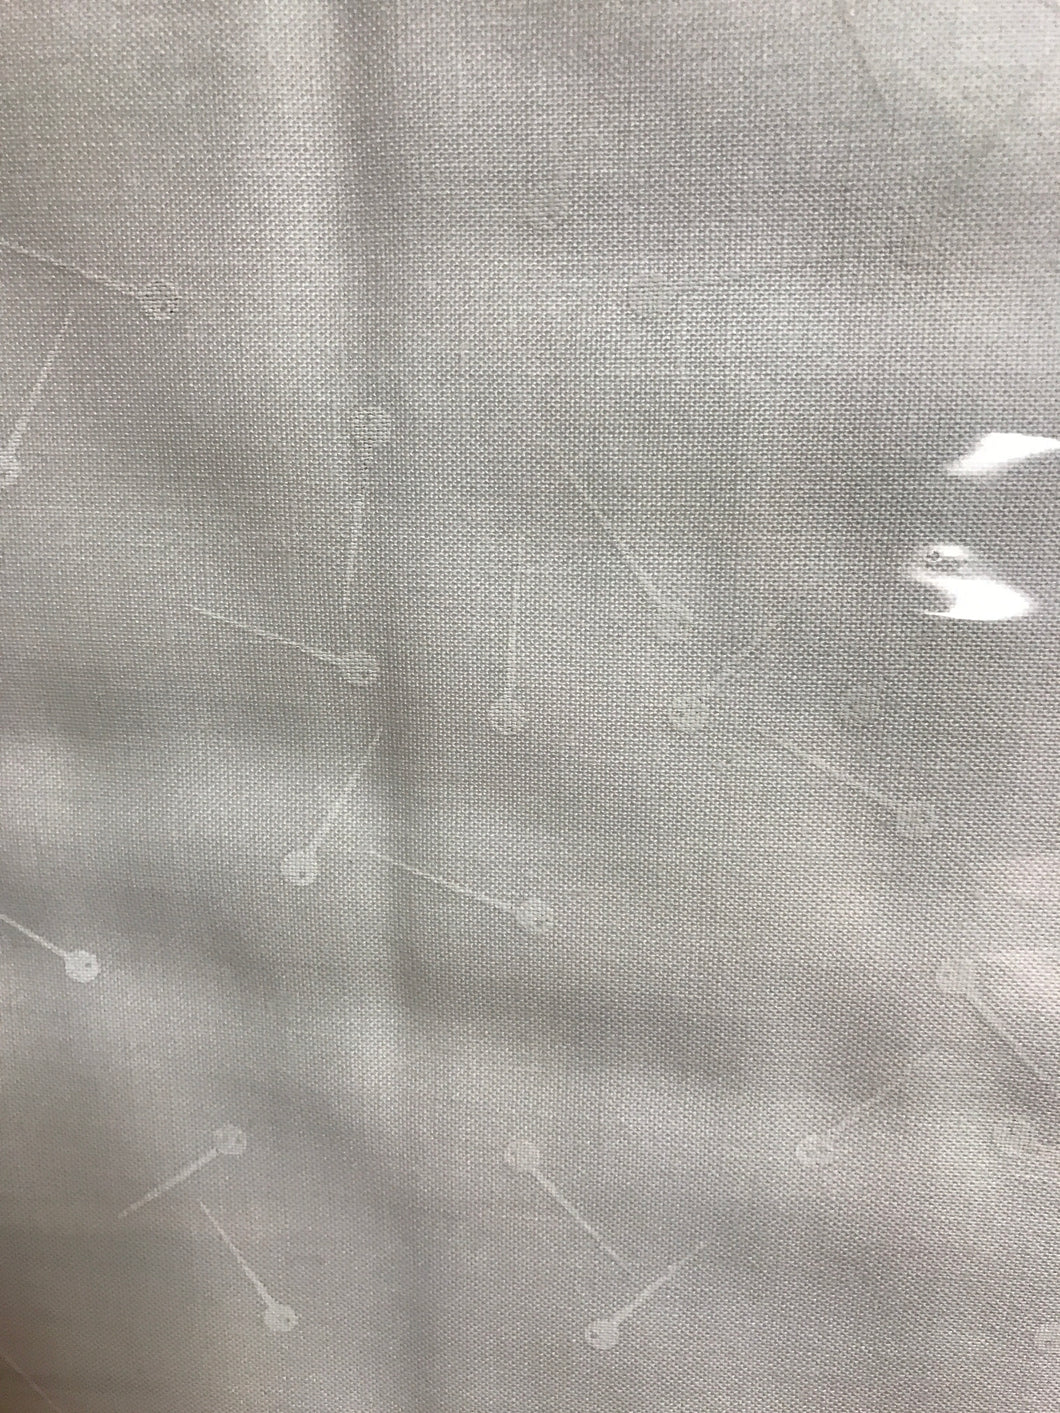 White on White Pin Drop Fabric by Riley Blake